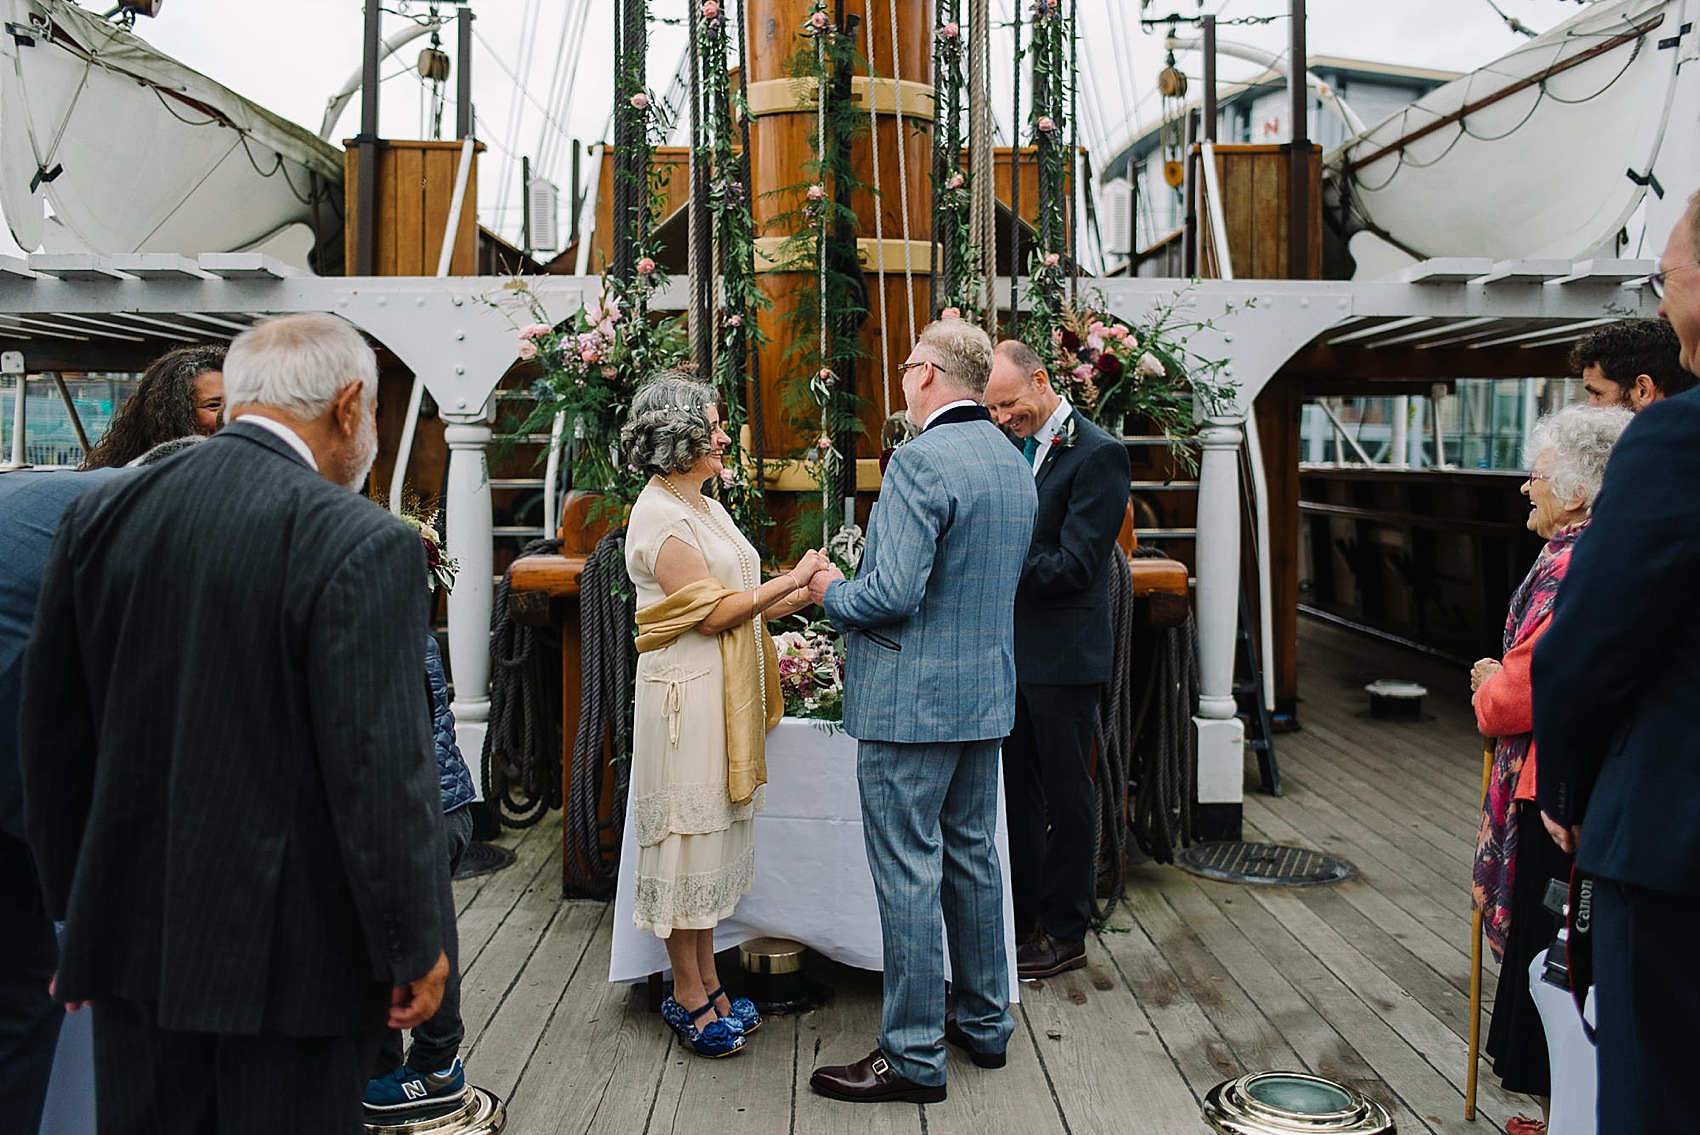 Wedding on a boat 1920s vintage dress 24